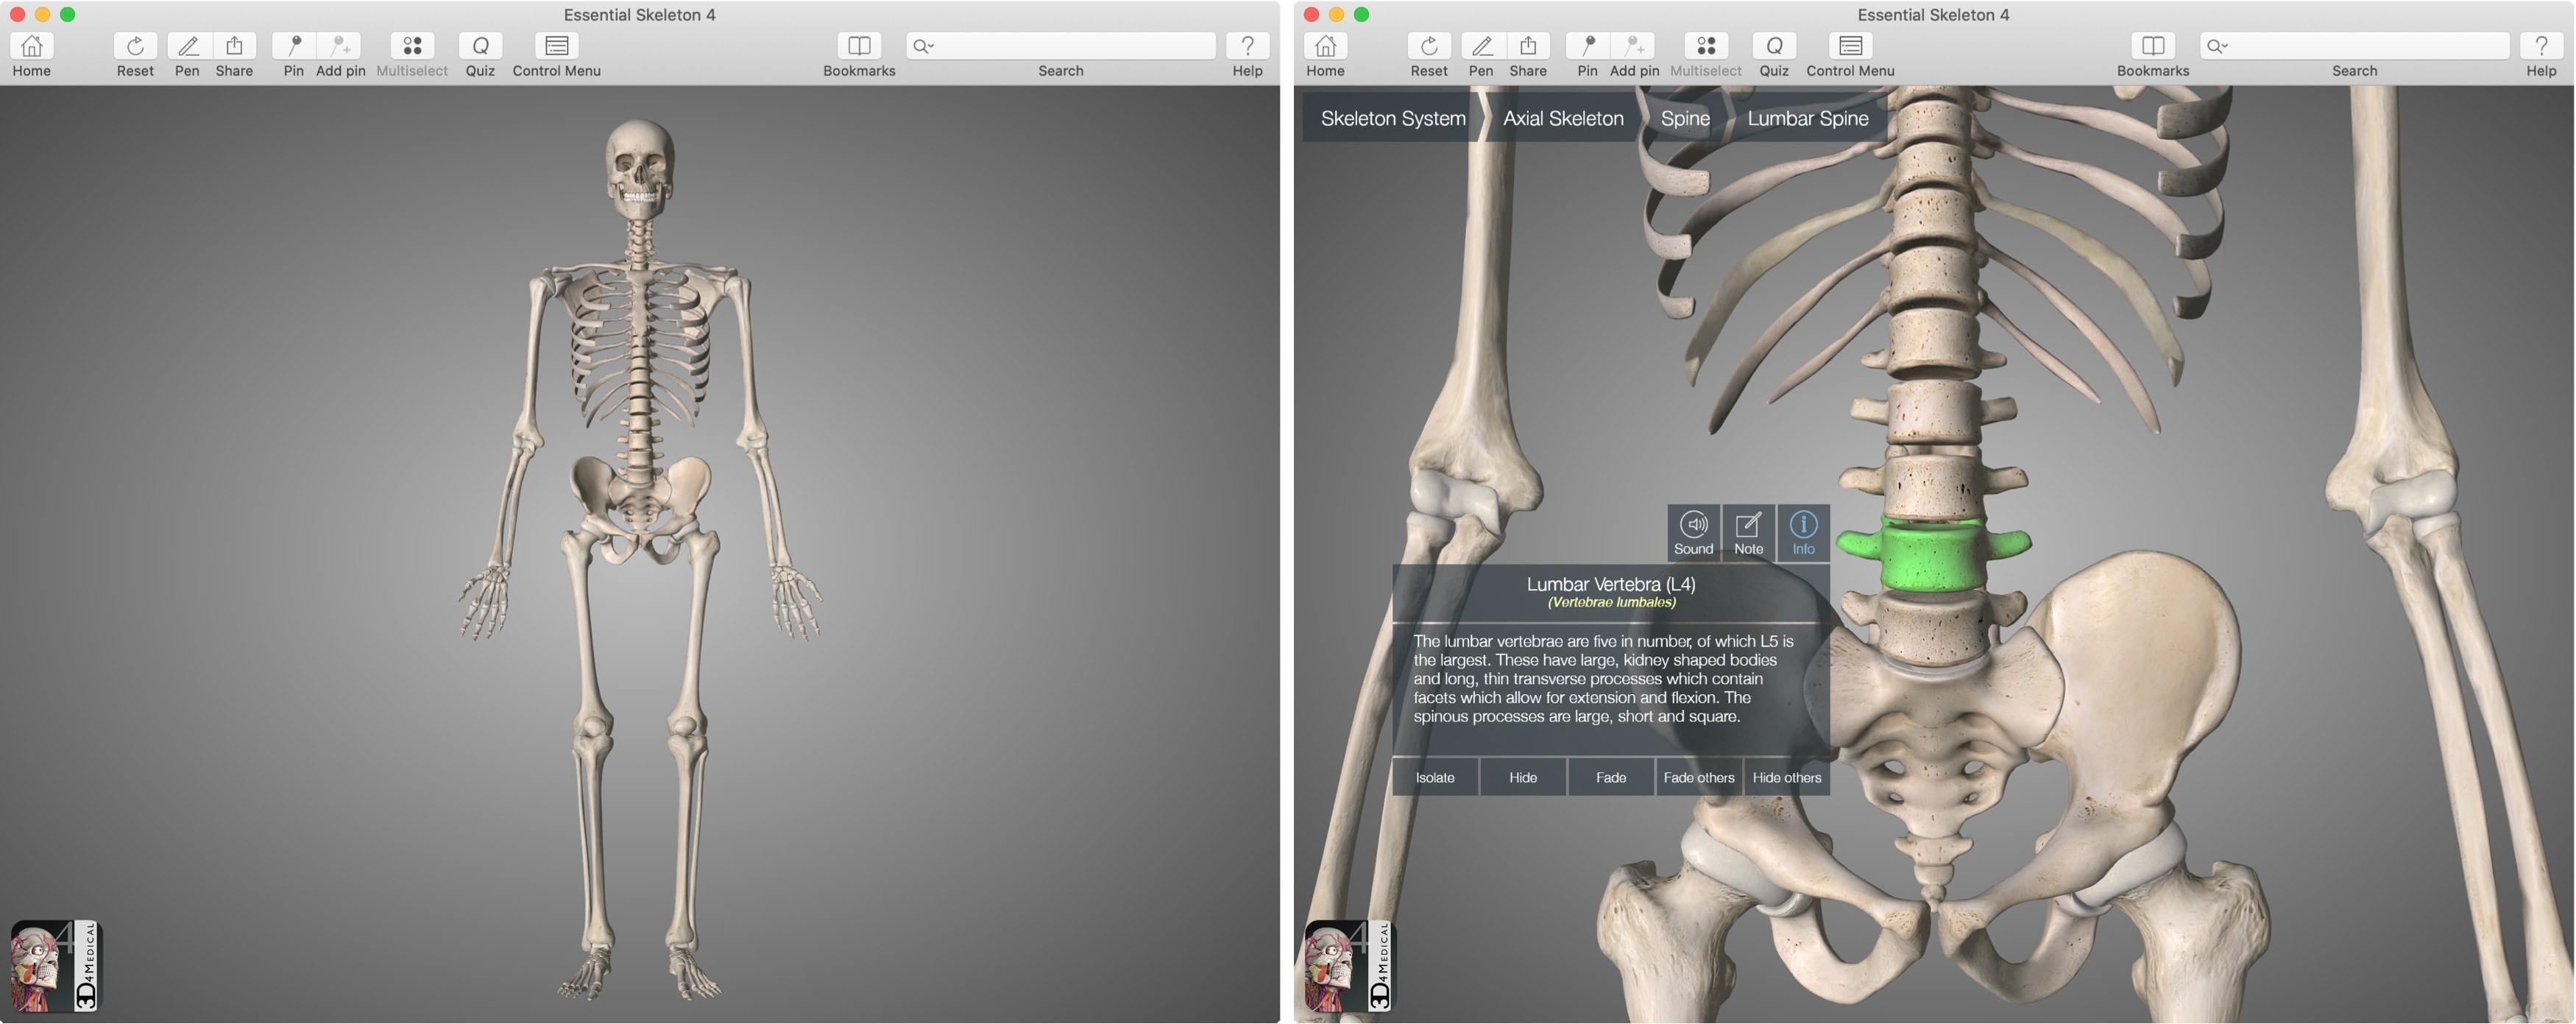 anatomy app for mac